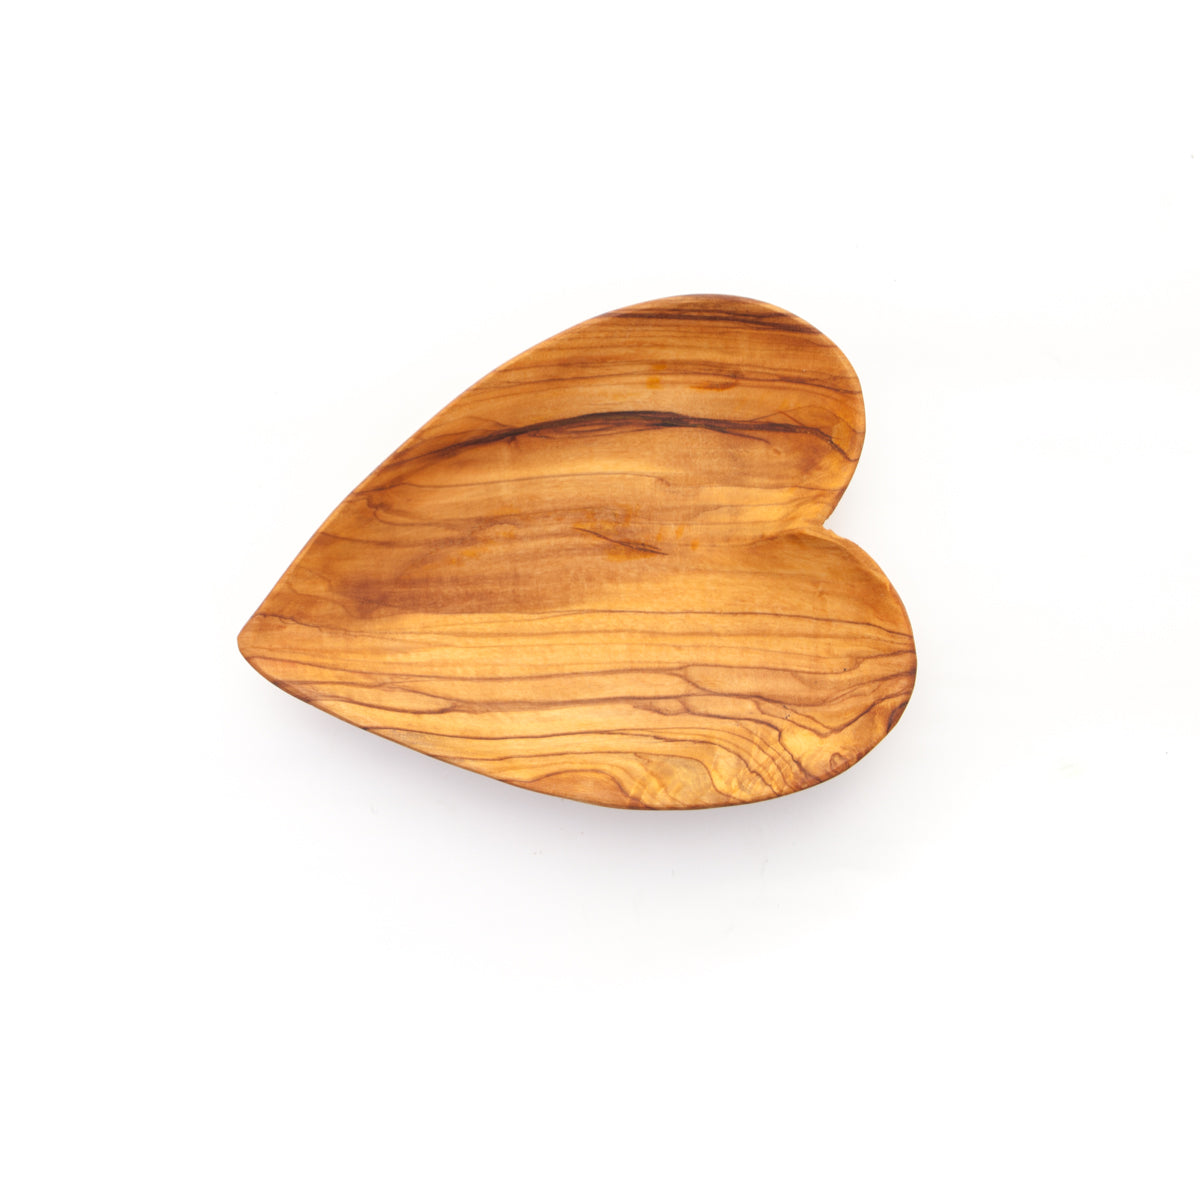 olive wood heart-shaped plates